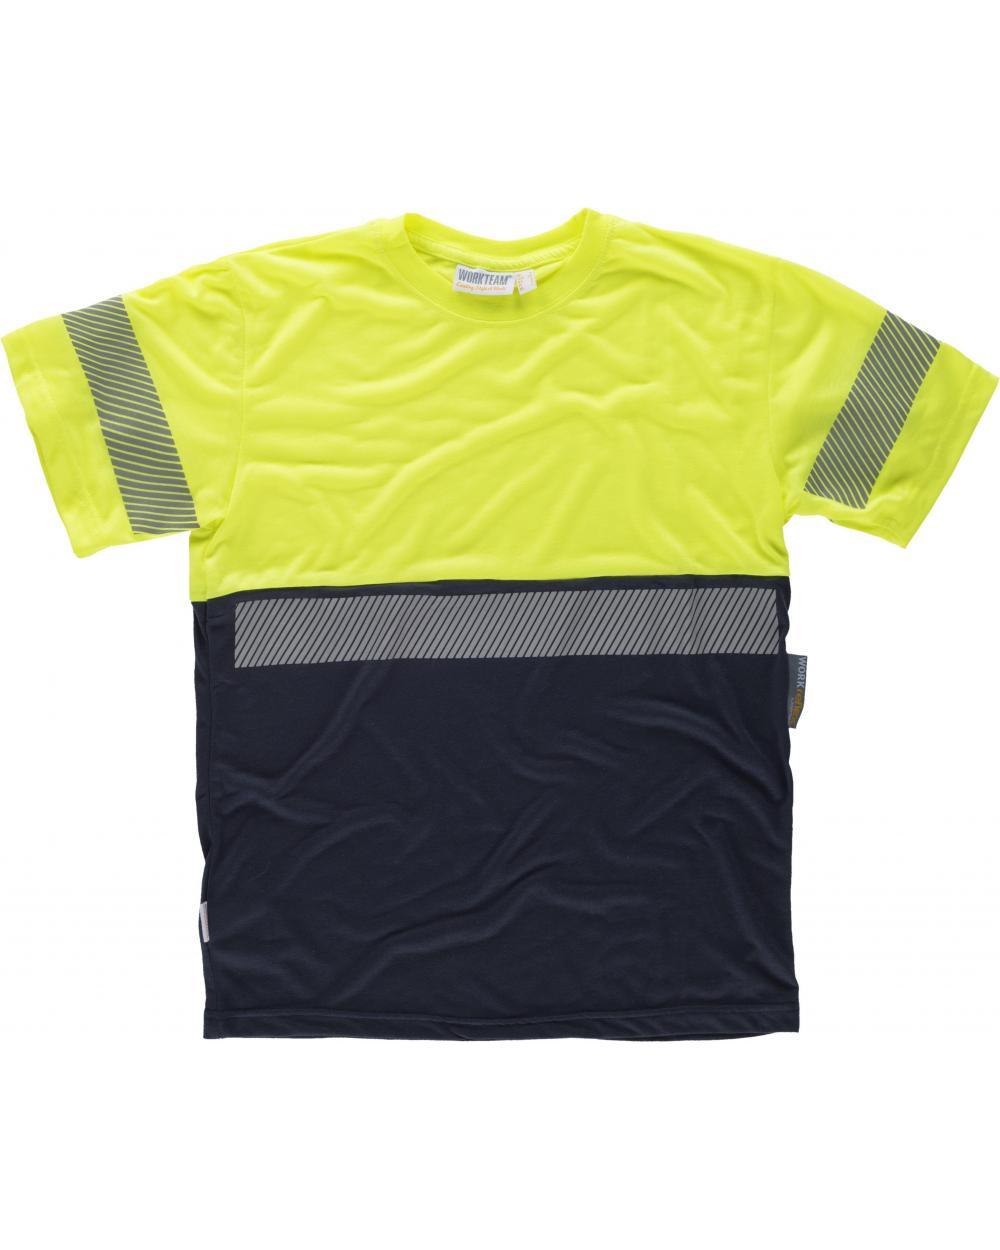 Comprar Camiseta tacto algodón con cintas reflectantes C6030 Marino+Amarillo AV workteam delante